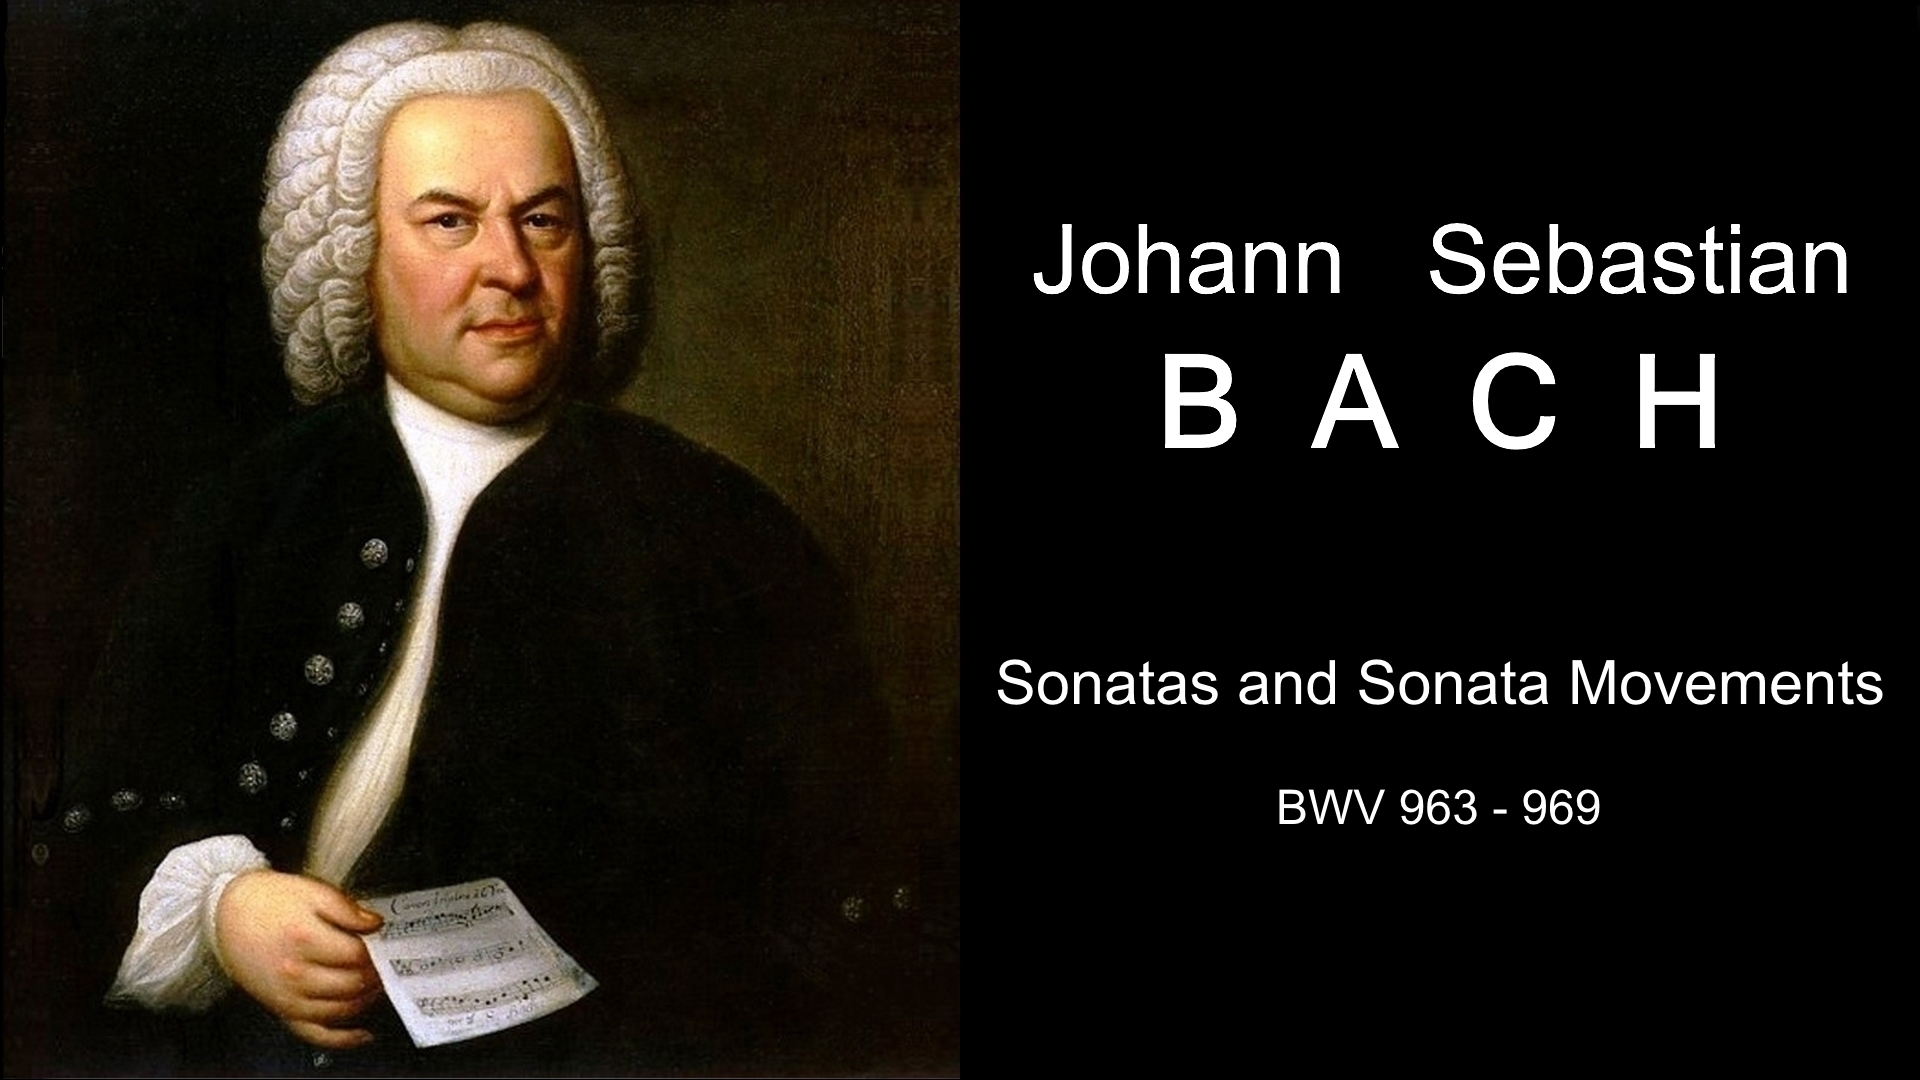 Люблю слушать баха. Иоганн Себастьян Бах. Иоганн Себастьян Бах портрет композитора. Иоганн Себастьян Бах (1685-1750). Иоганн Себастьян Бах эпоха Барокко.